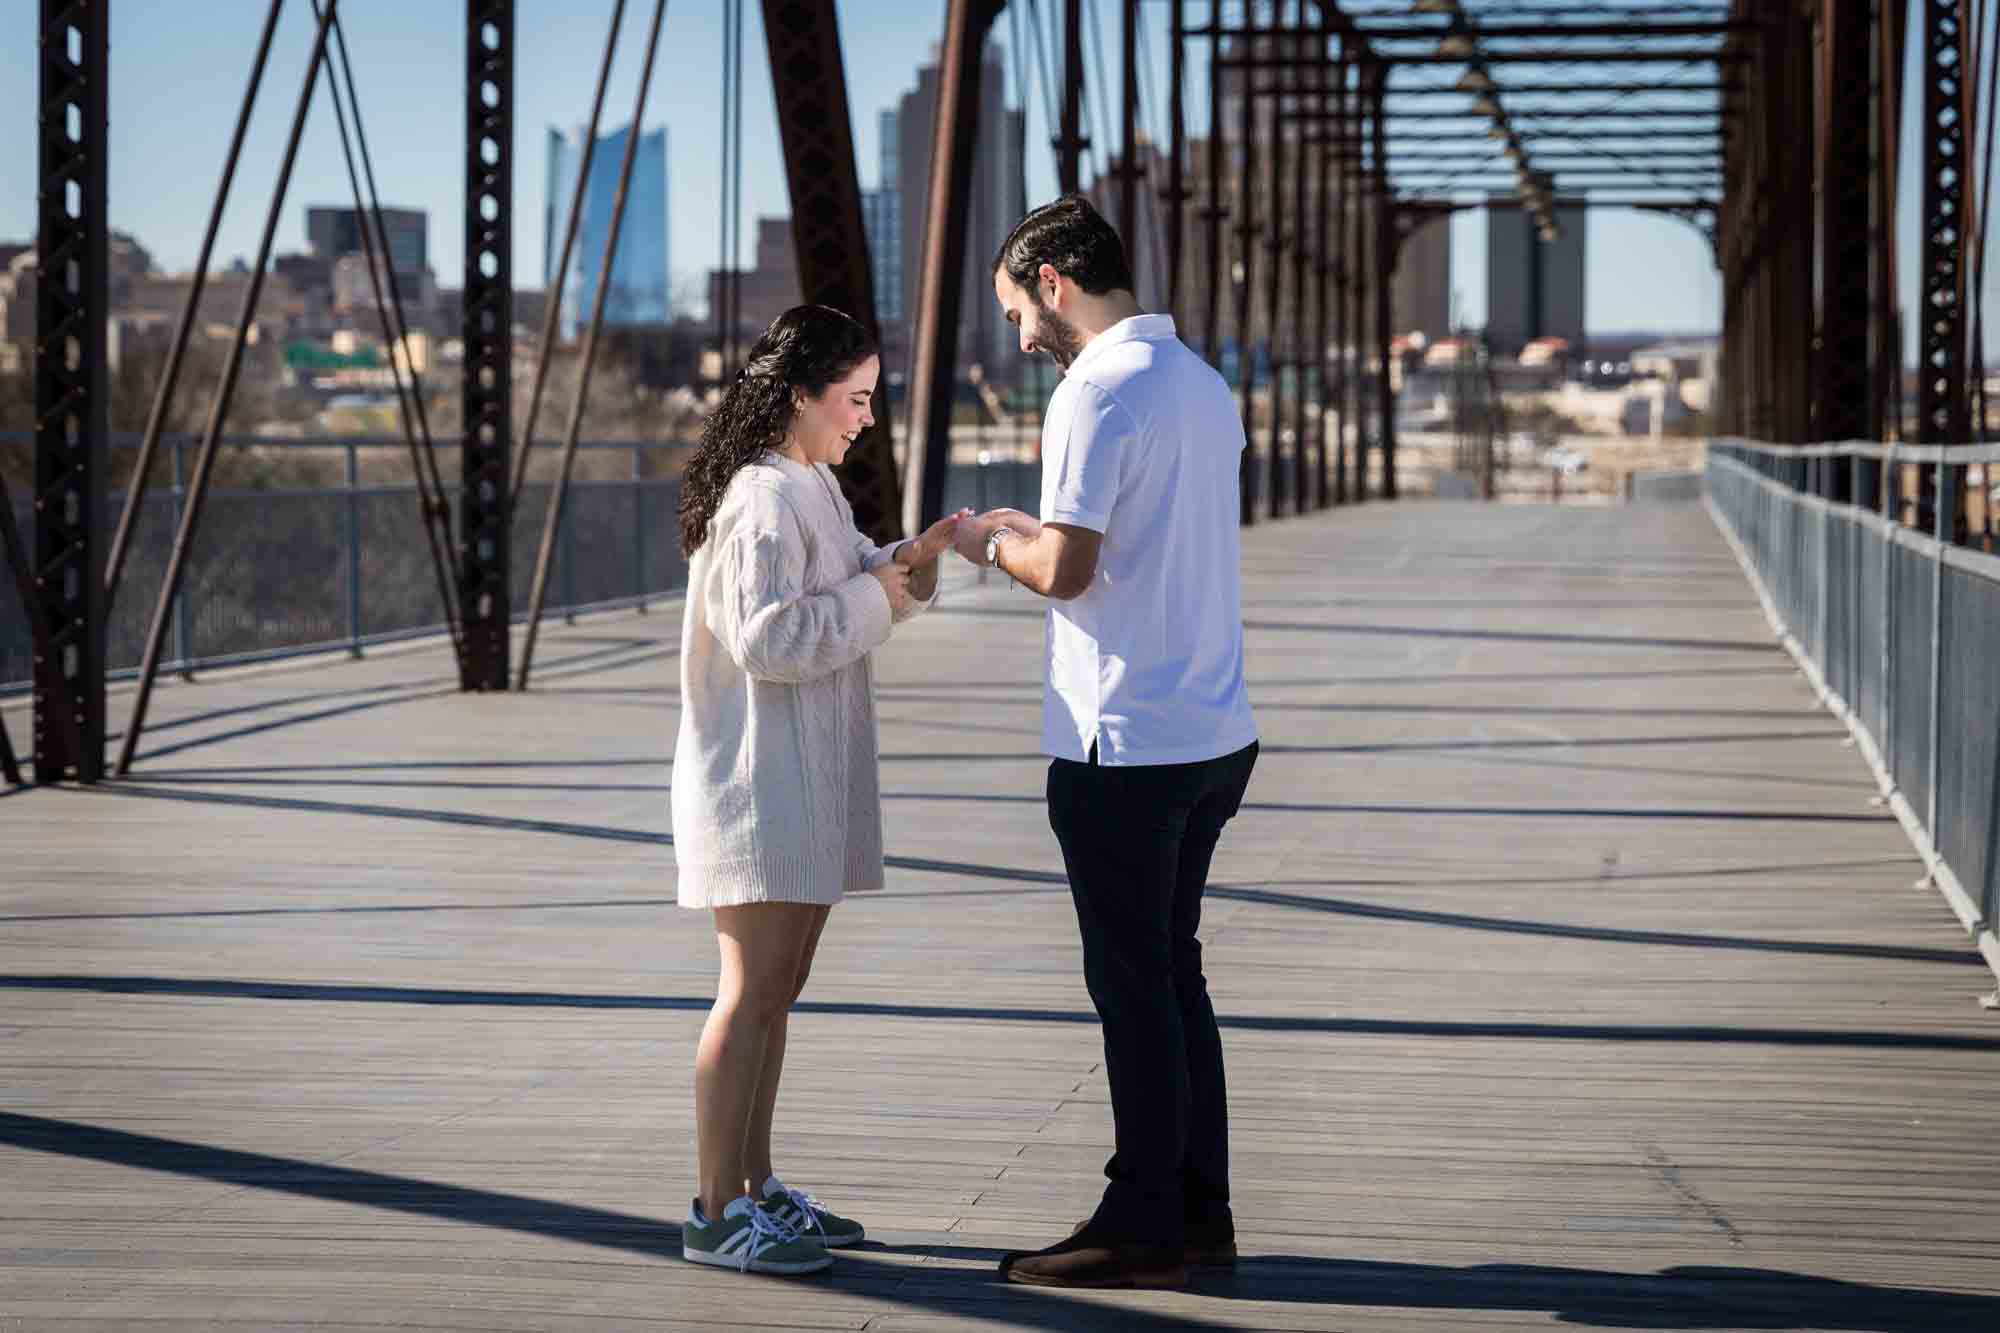 Man putting ring on woman's hand during a Hays Street Bridge proposal